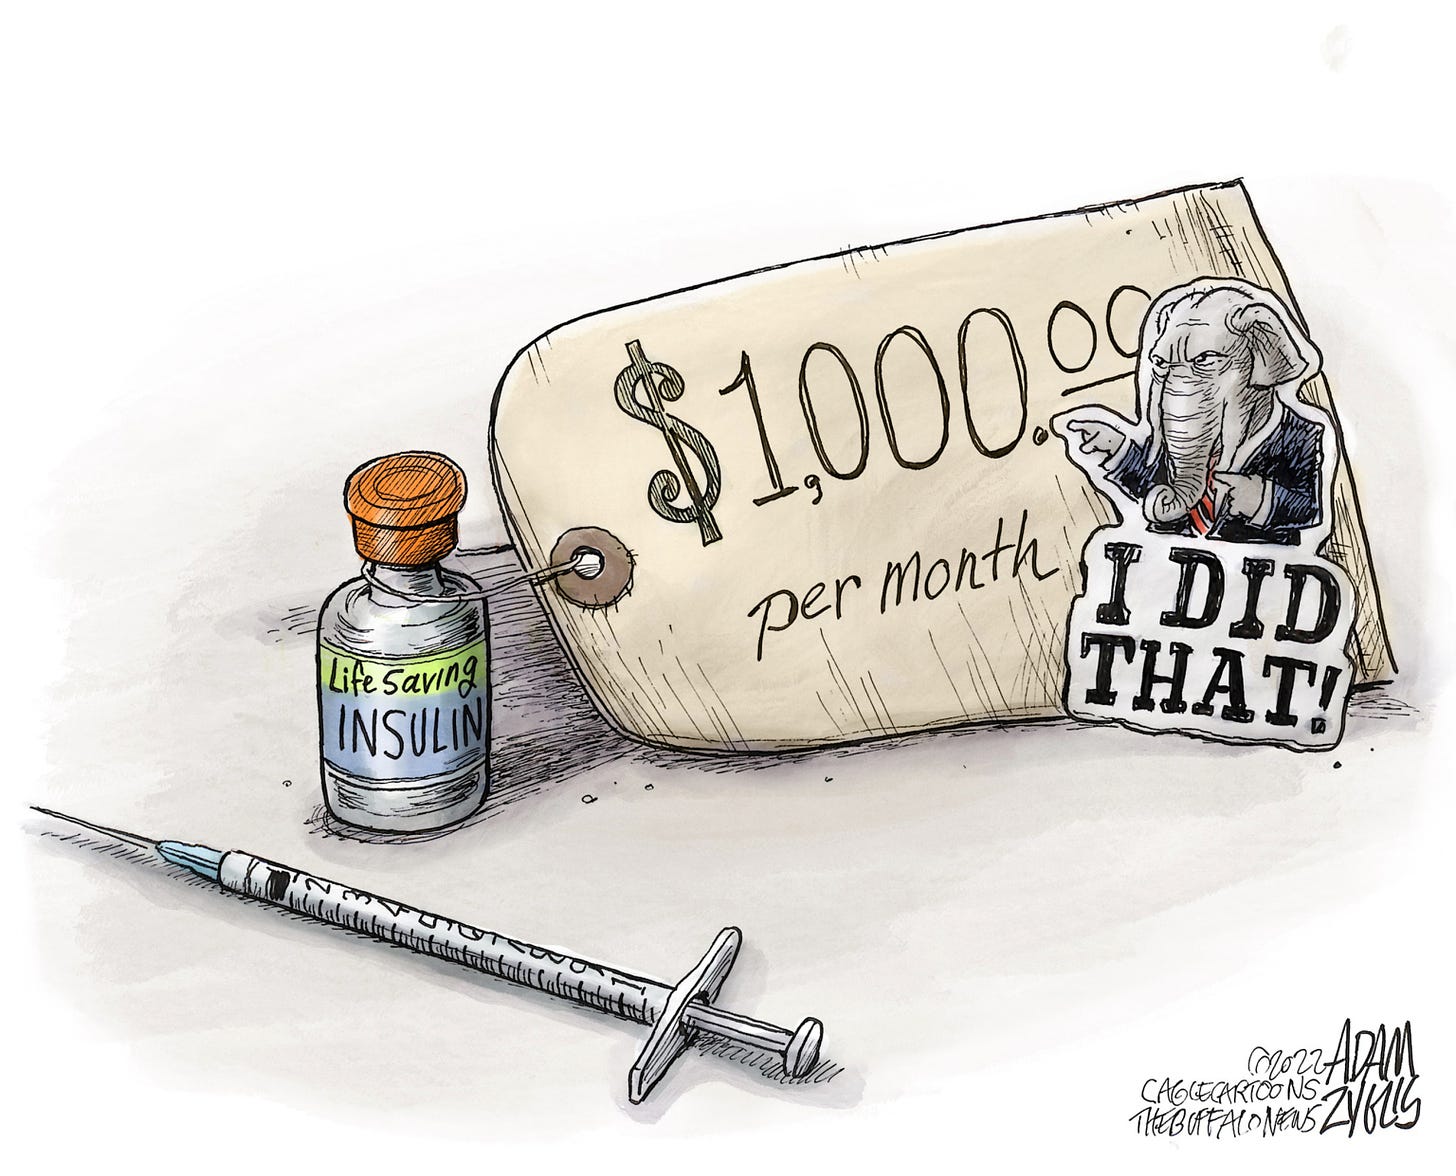 Republicans blocked the price cap on insulin